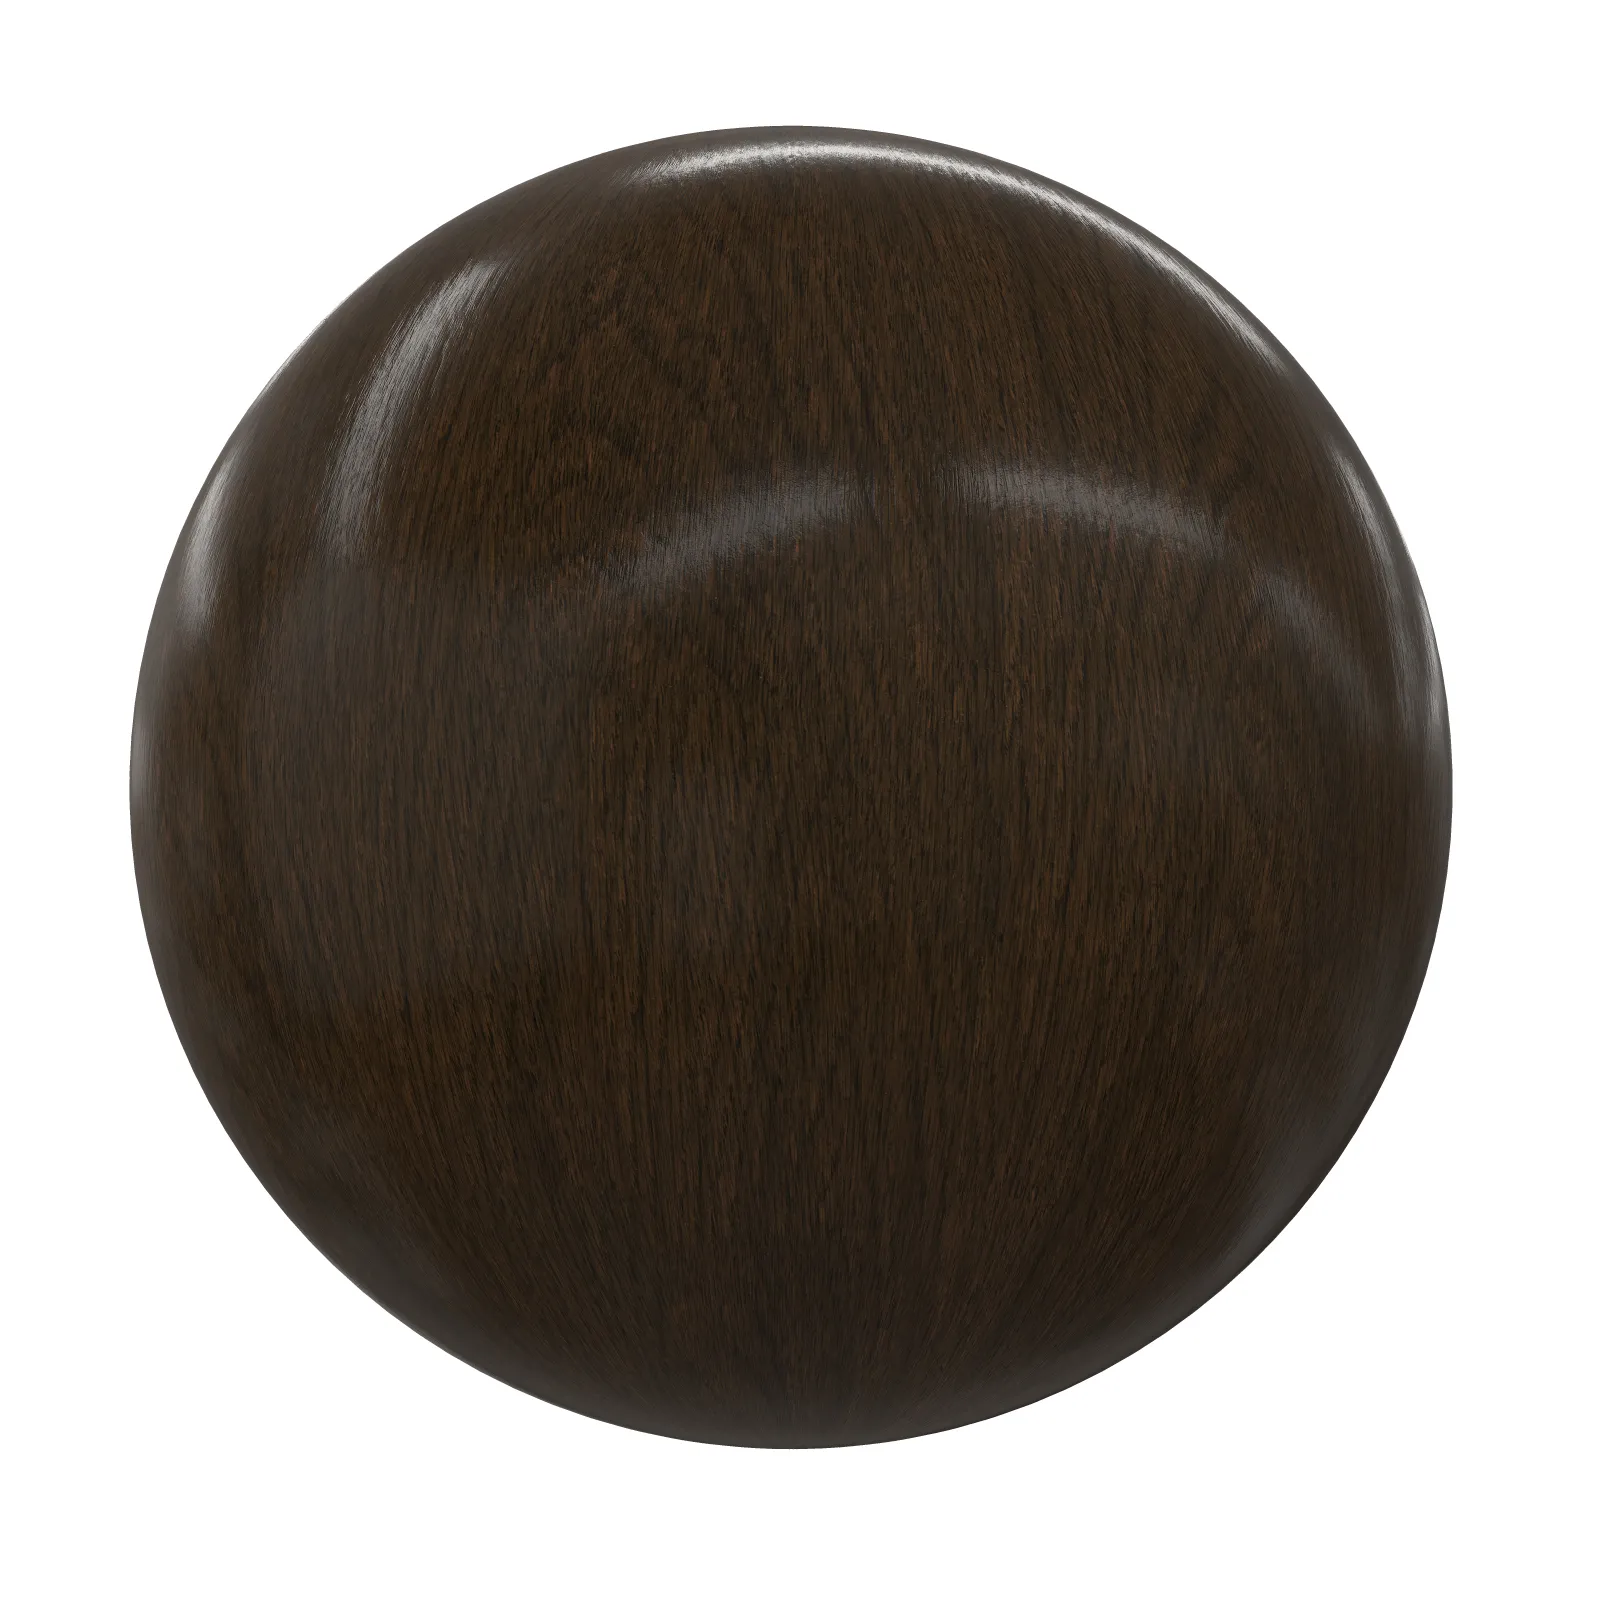 3ds Max Files – Texture – 8 – Wood Texture – 78 – Wood Texture by Minh Nguyen